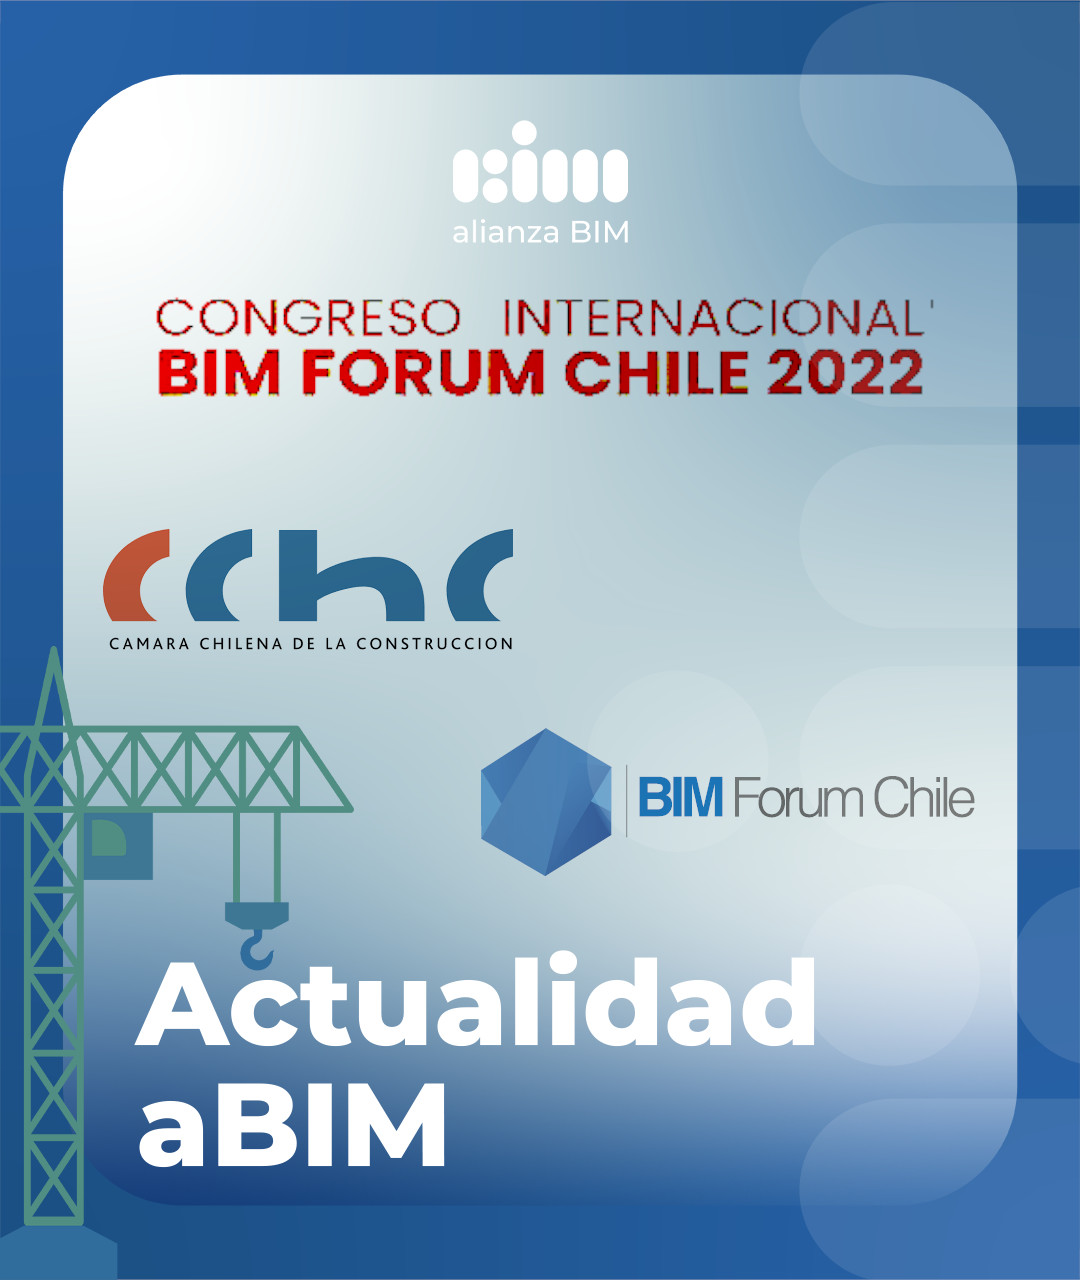 BIM Forum Chile 2022